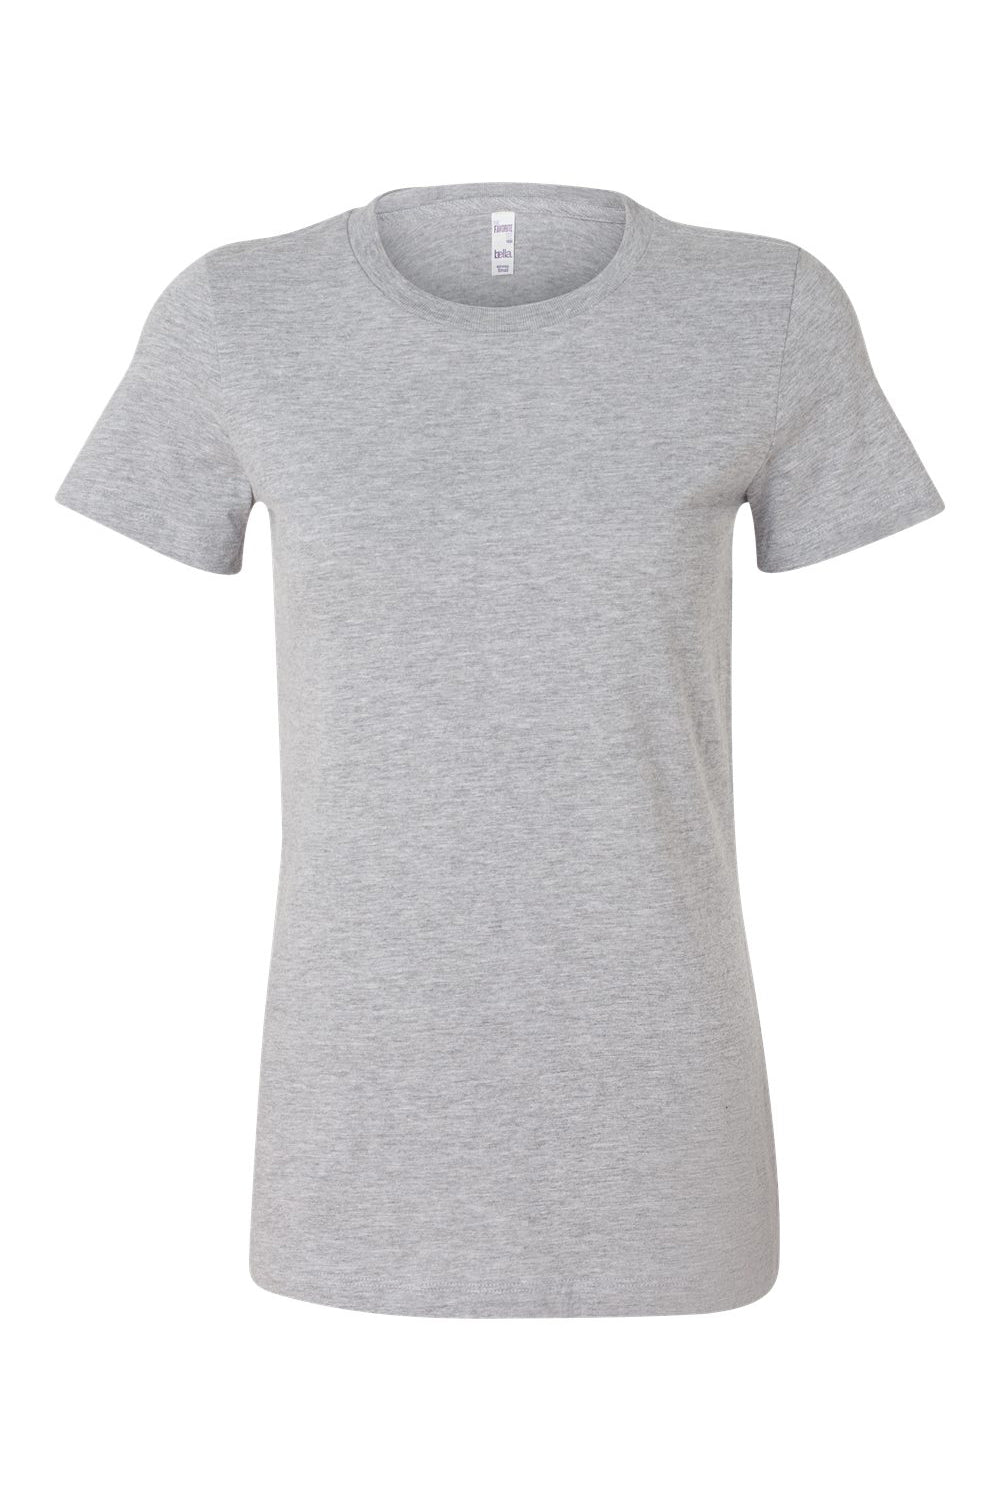 Bella + Canvas BC6004/6004 Womens The Favorite Short Sleeve Crewneck T-Shirt Heather Grey Flat Front